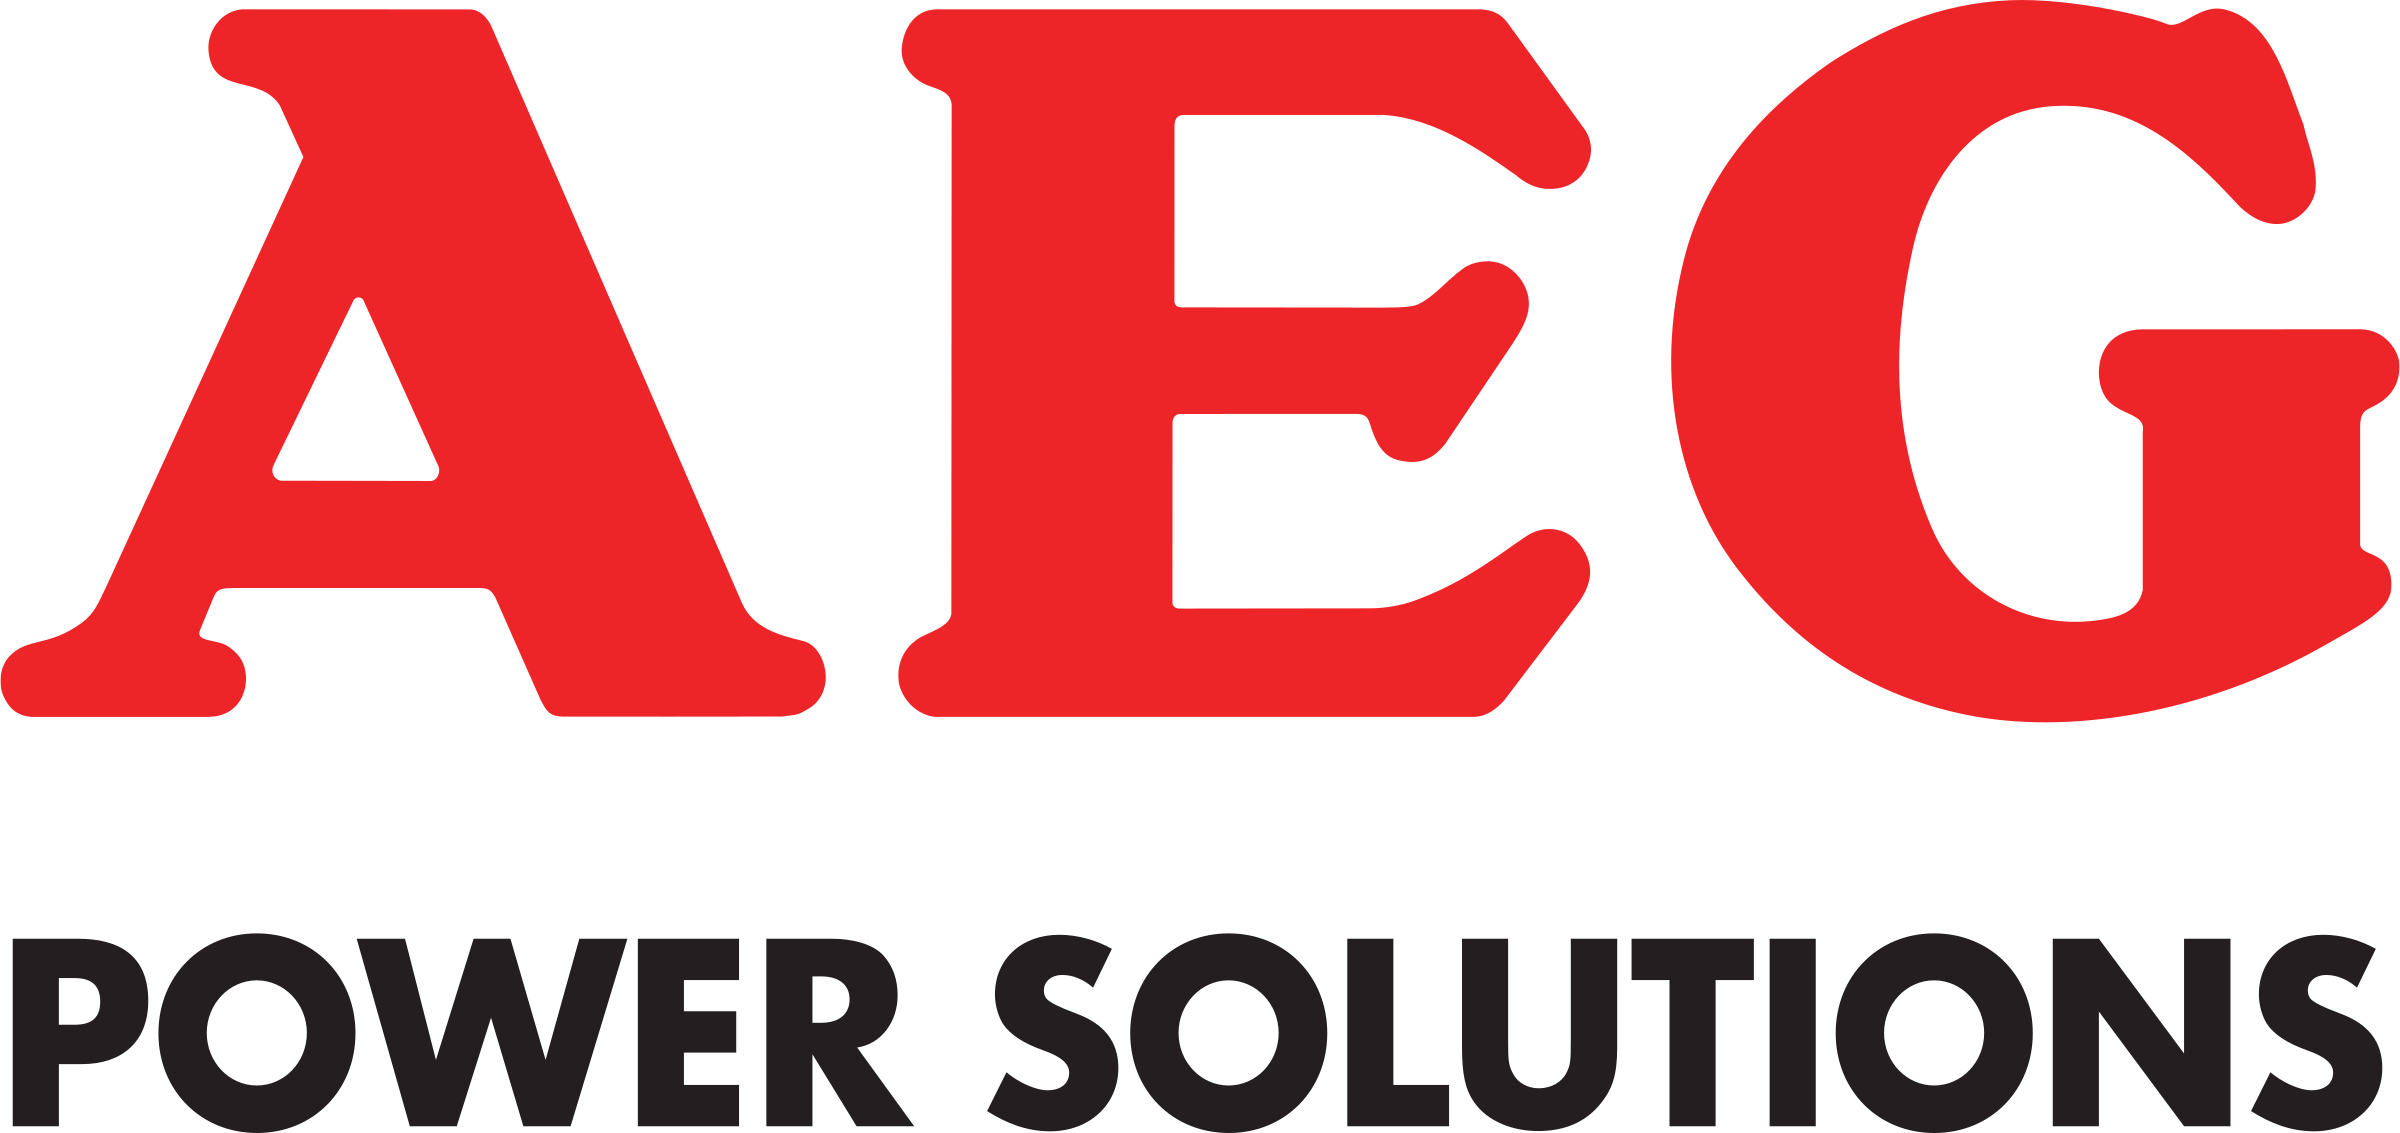 AEG Power Solutions Logo PNG Transparent & SVG Vector.